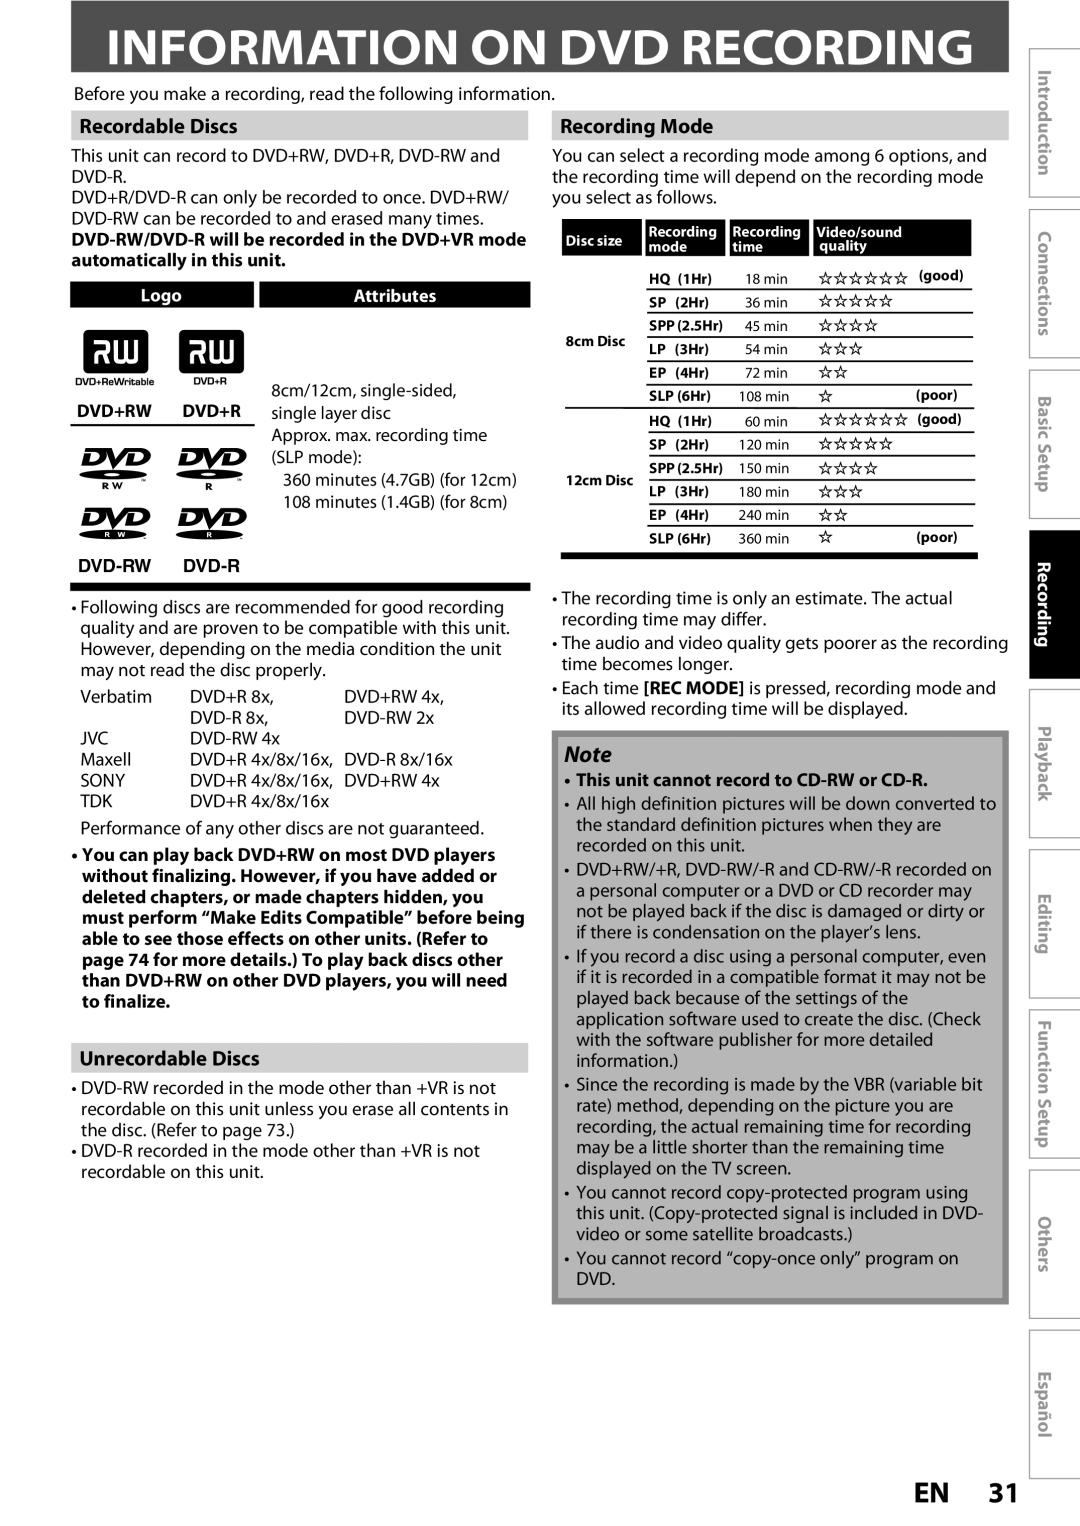 Magnavox ZC352MW8 Information on DVD Recording, Recordable Discs, Recording Mode, Unrecordable Discs, LogoAttributes 